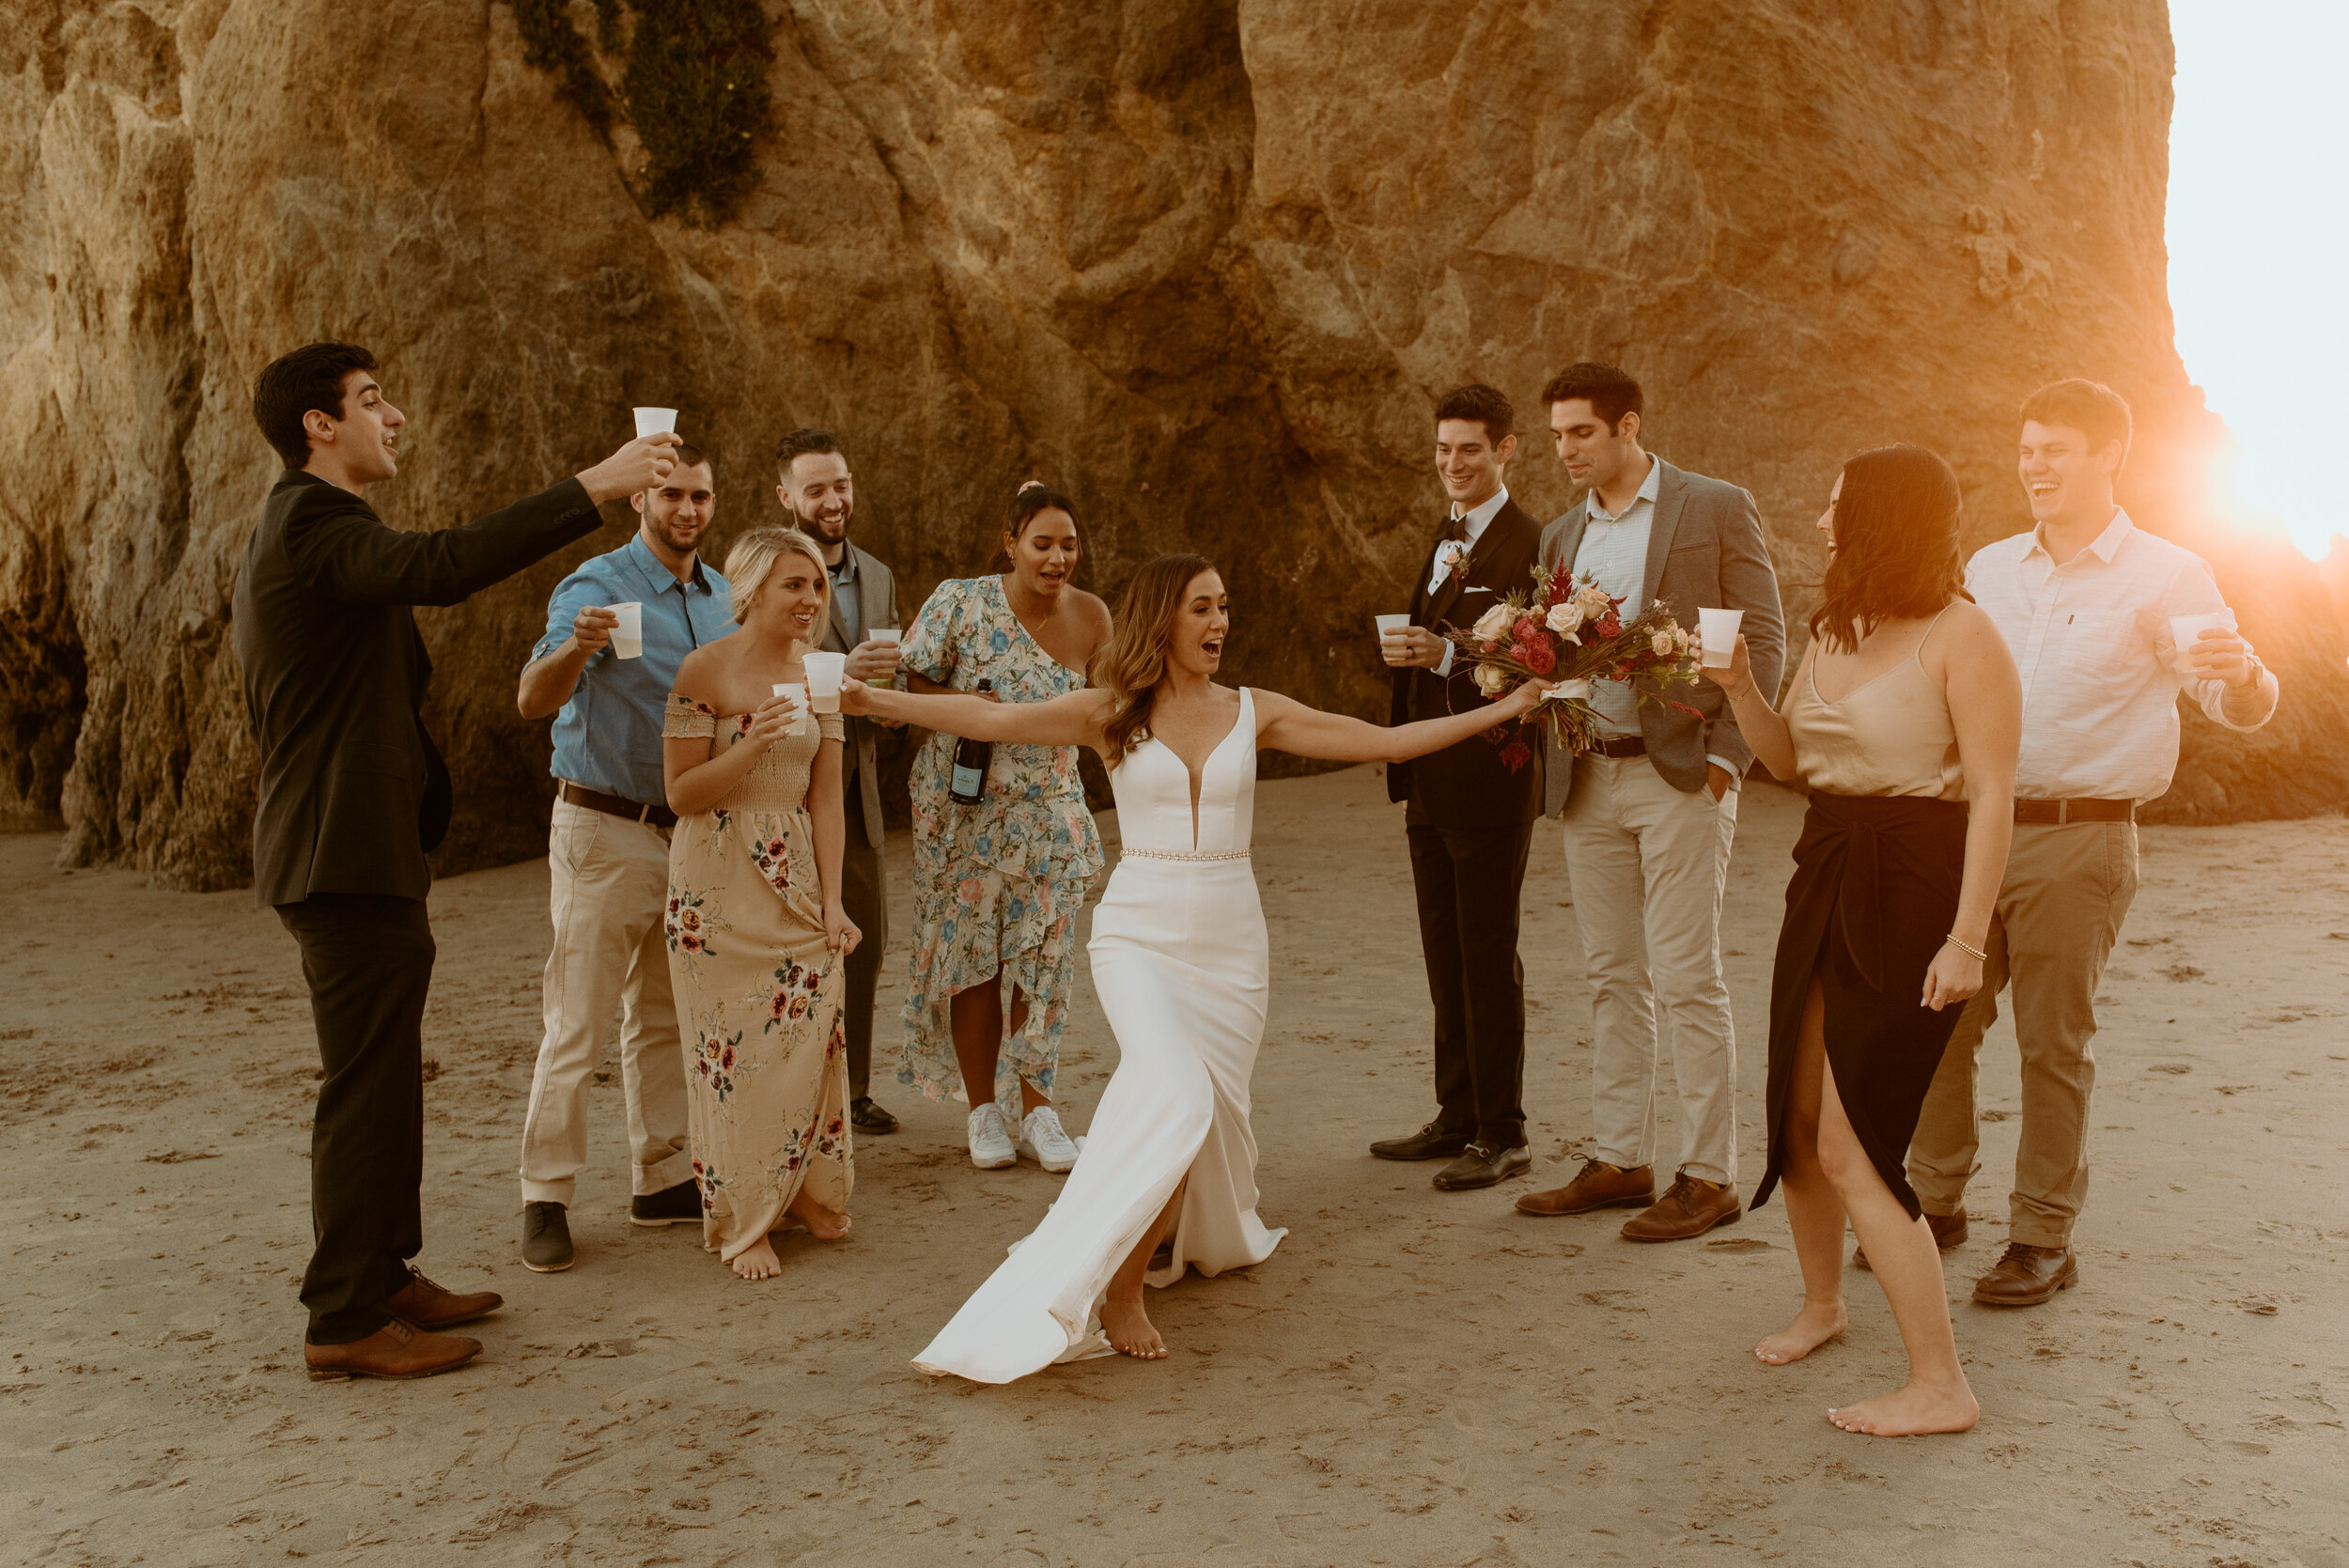 Malibu Airbnb Elopement | El Matador Beach wedding | Point Dume Malibu Bride and Groom portraits | California Coast | California Elopement photographer | Champagne Pop